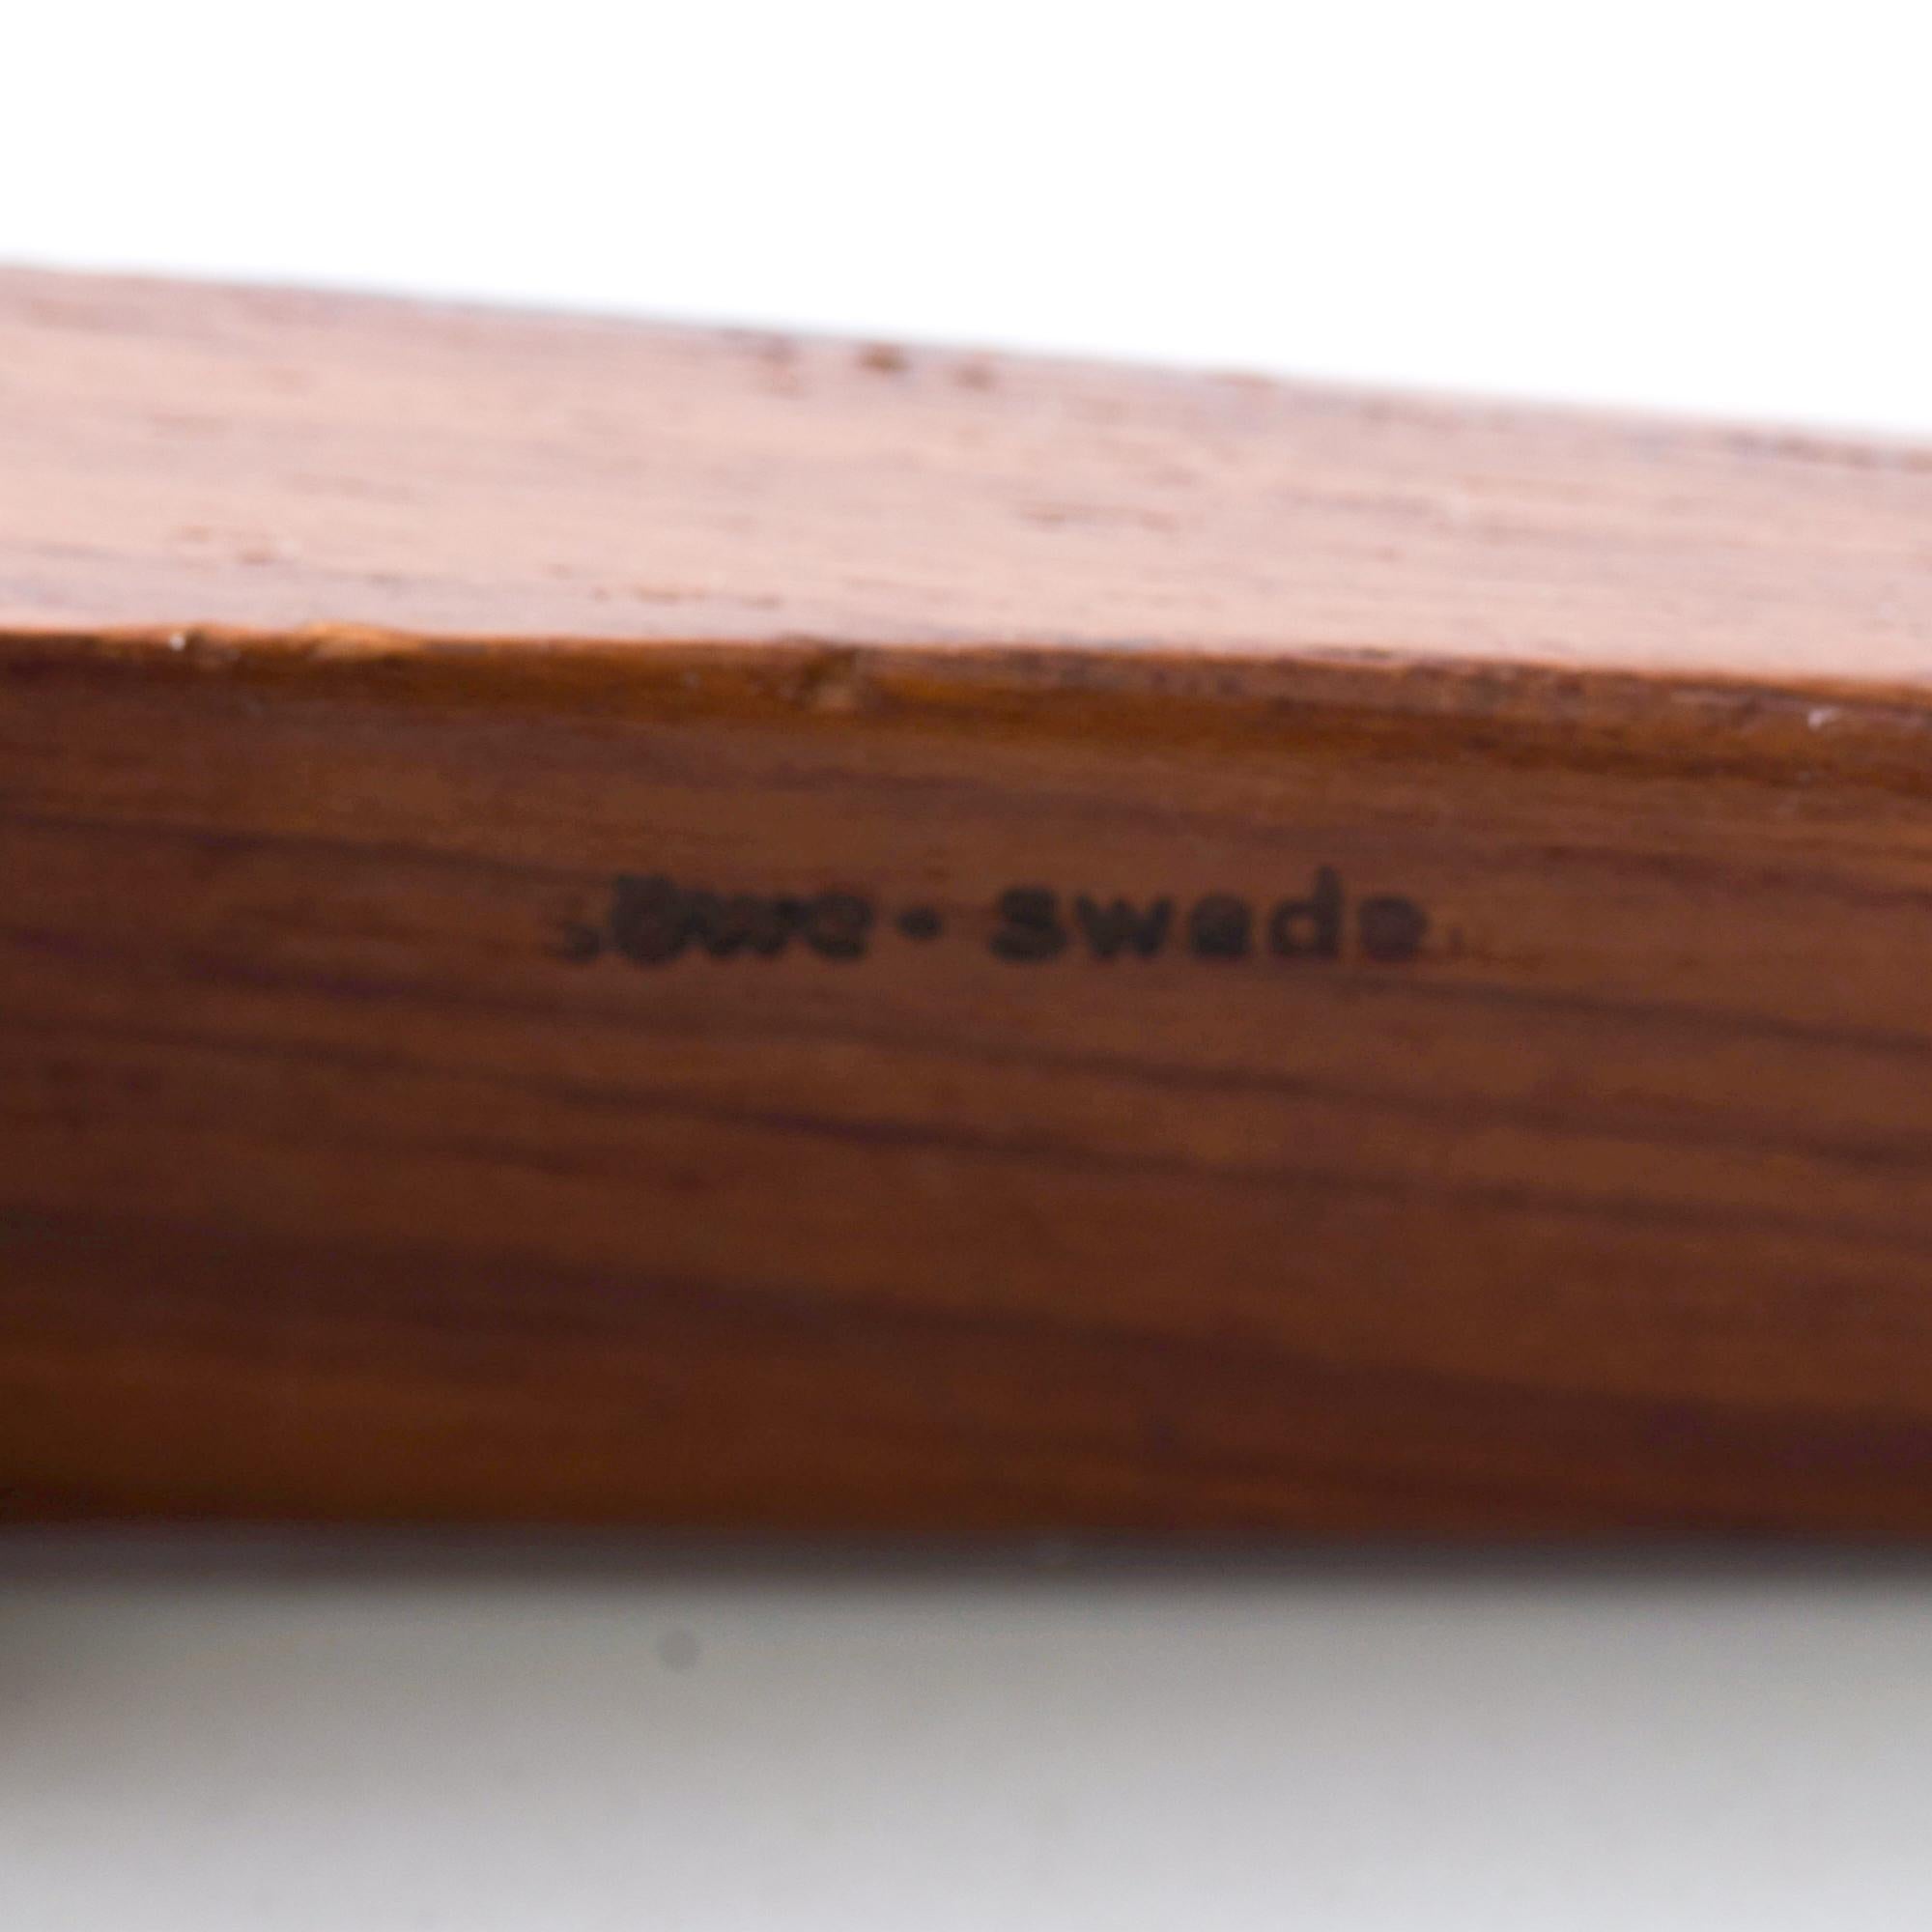 SK Sowe Konst Sweden teak nutcracker utensil tool, 1960s
Made in Sweden midcentury Scandinavian Modern
Measures: 11